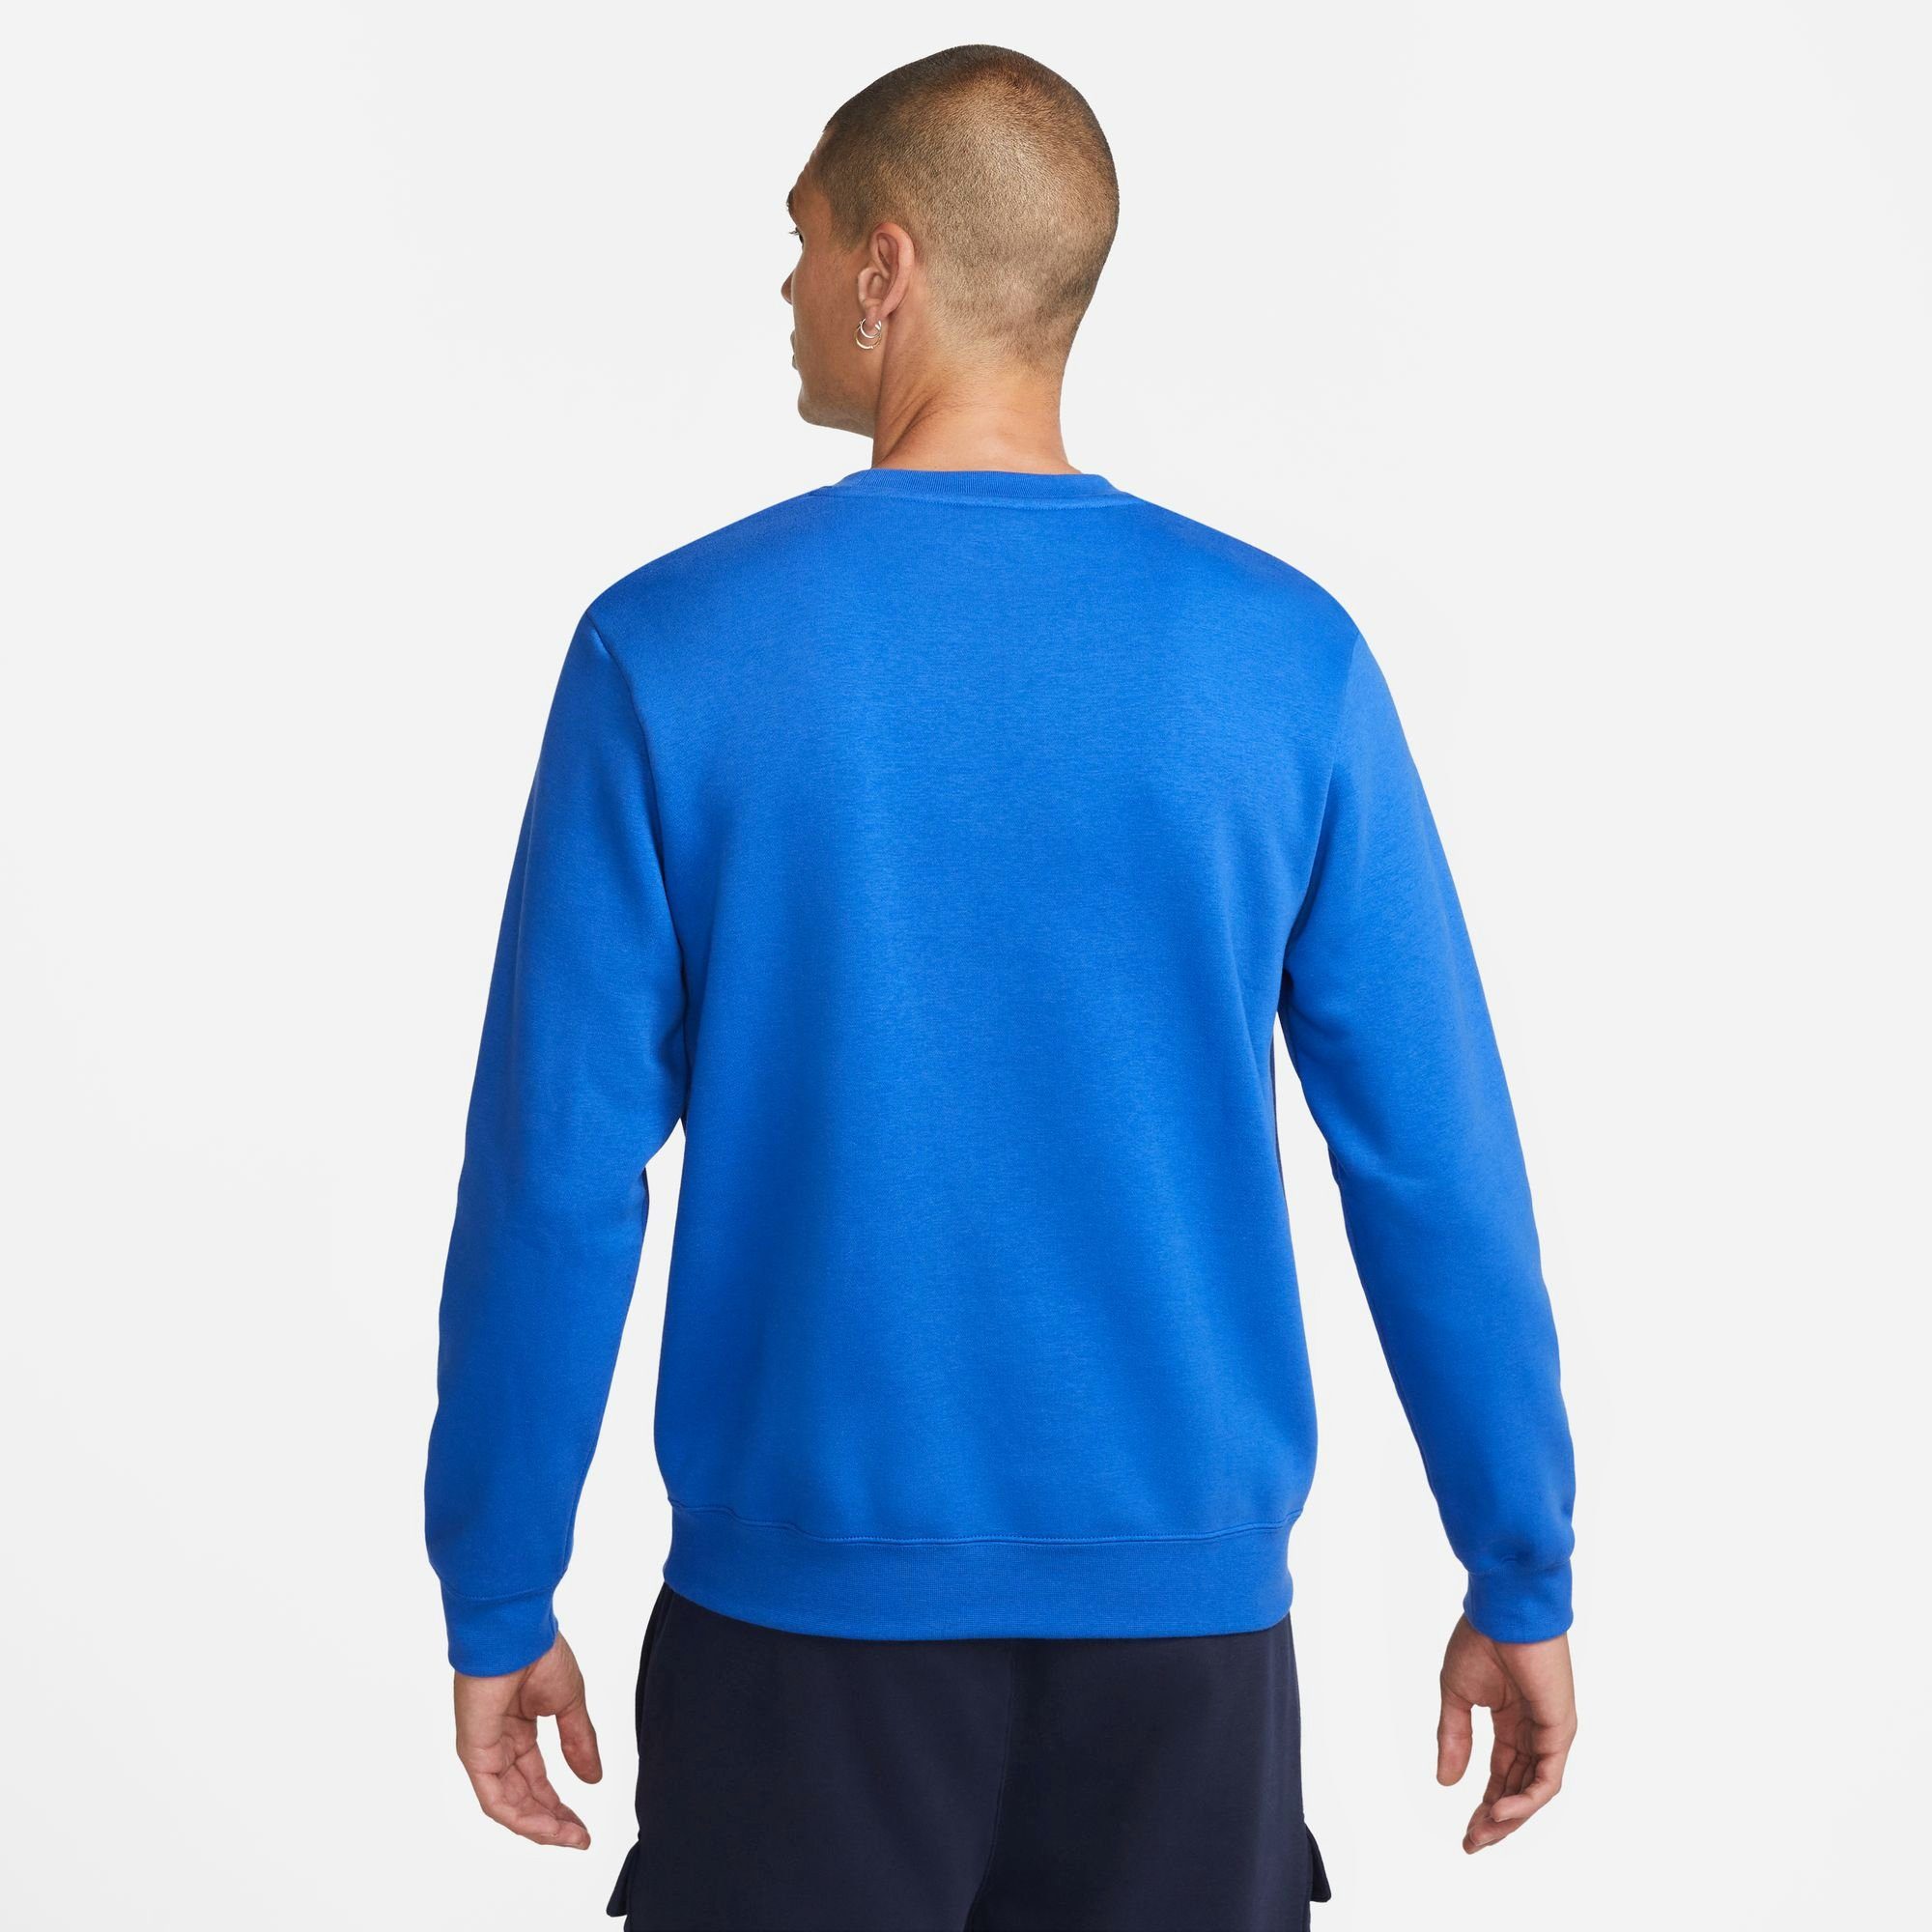 NSW ROYAL/DEEP Sweatshirt CREW GAME BLUE BB Sportswear SP FLC M Nike ROYAL